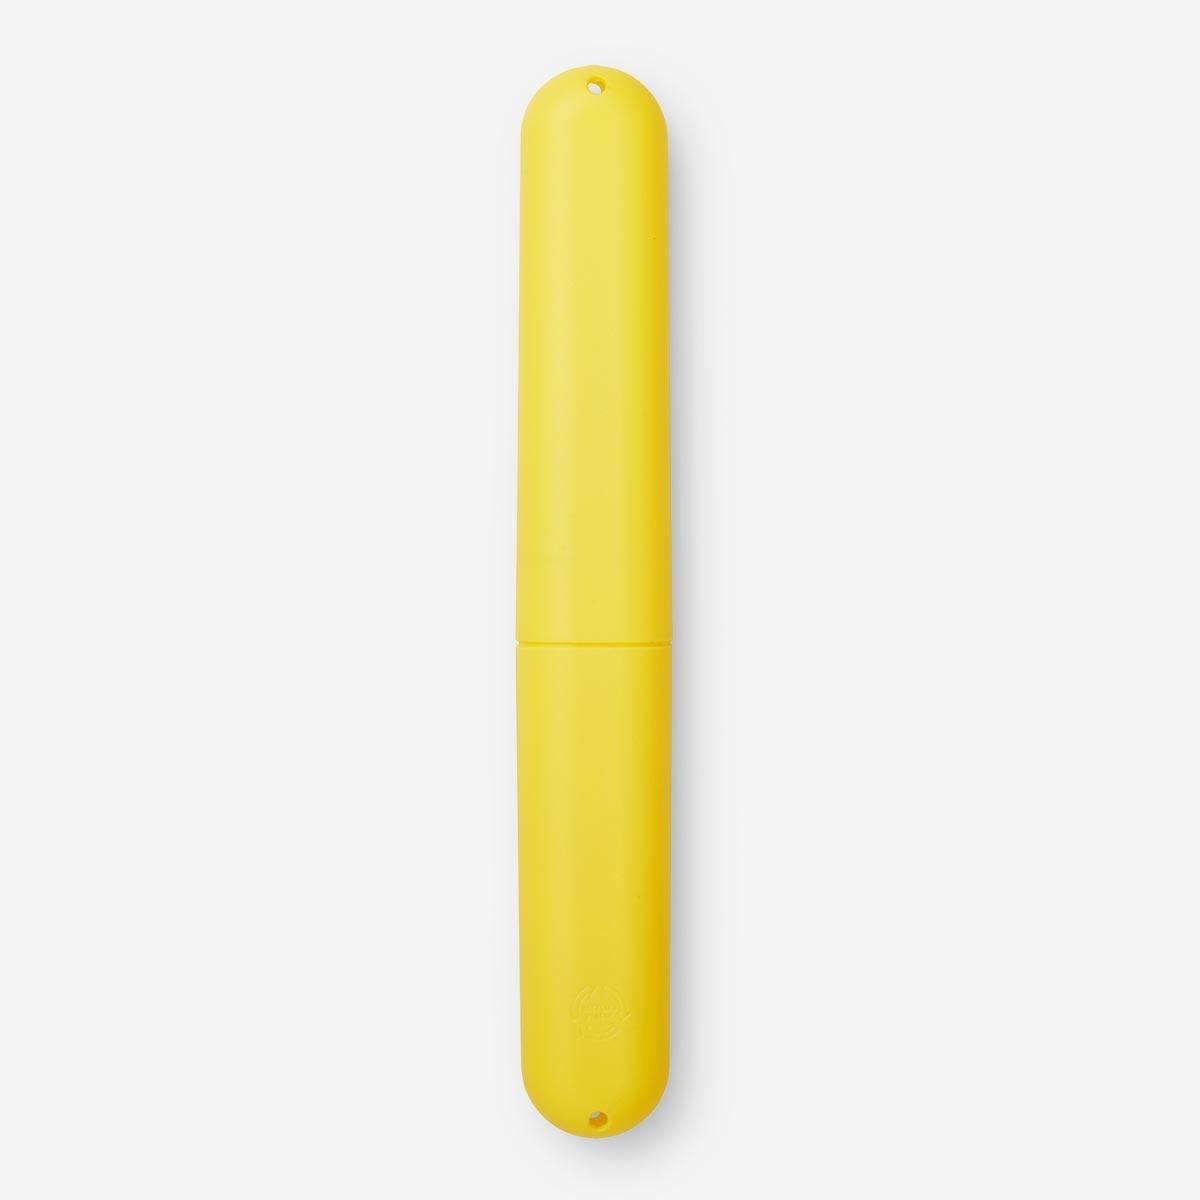 Yellow toothbrush case